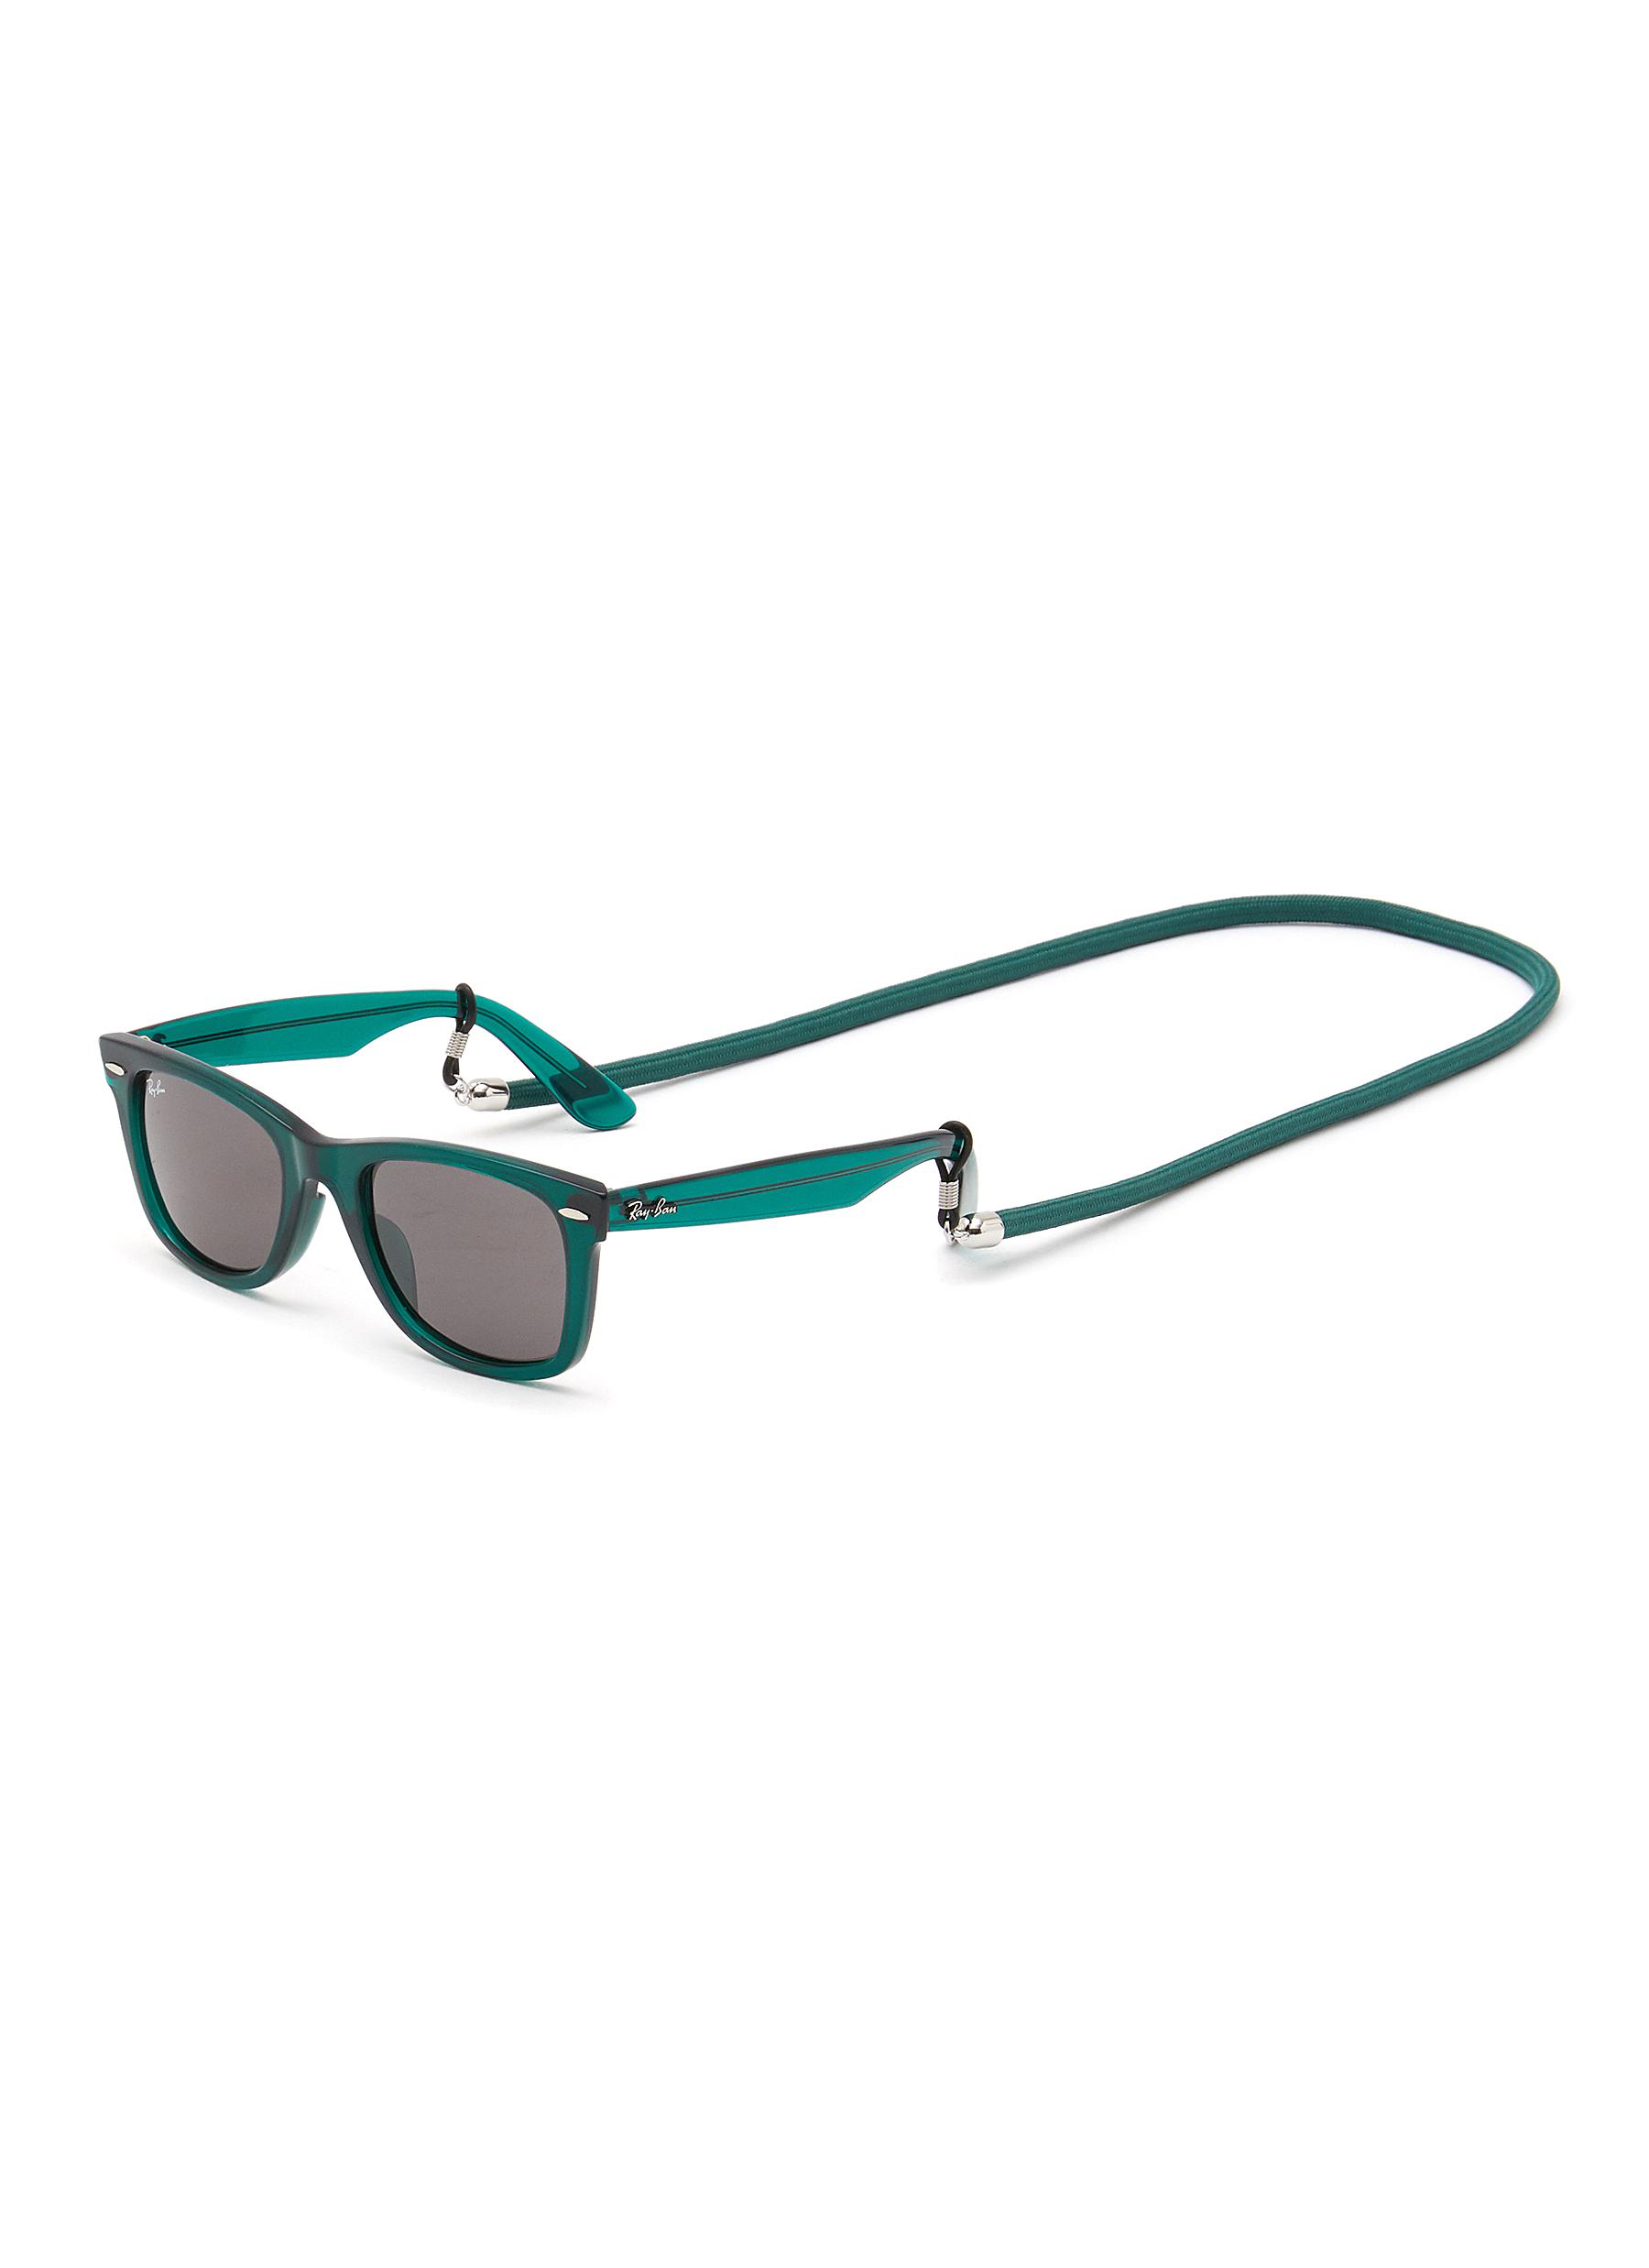 Top 73+ imagen ray ban sunglasses strap